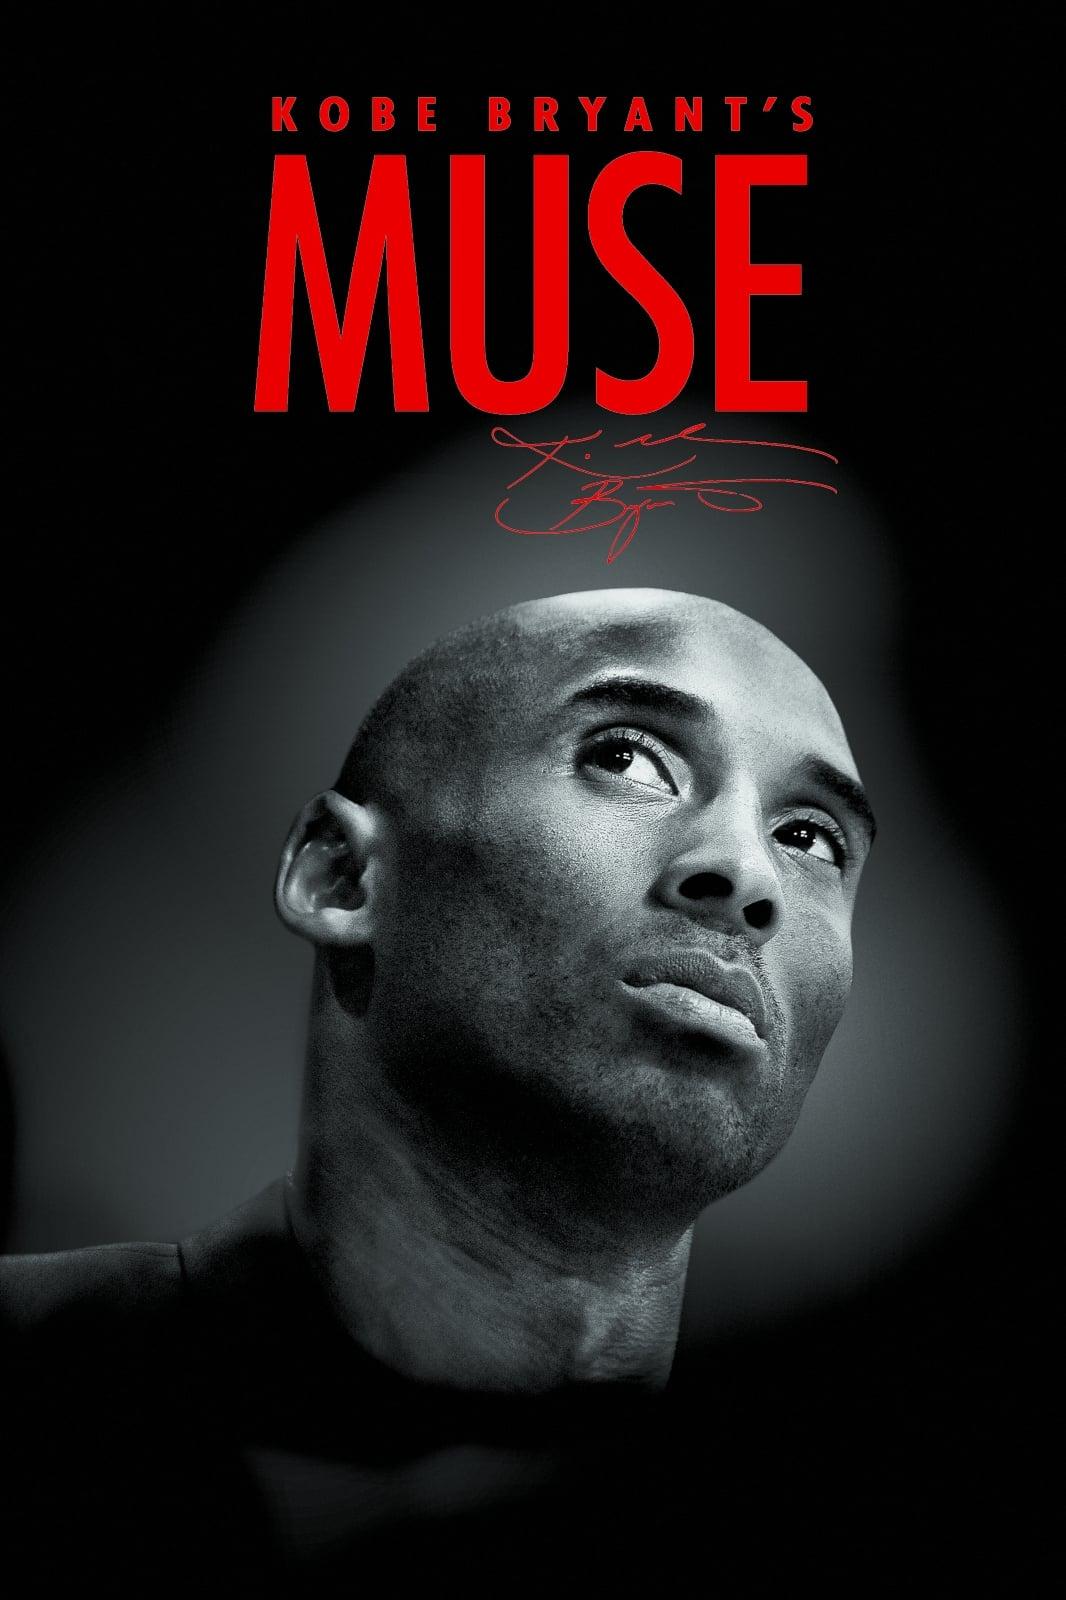 Kobe Bryant: A legenda (Muse) 2015.